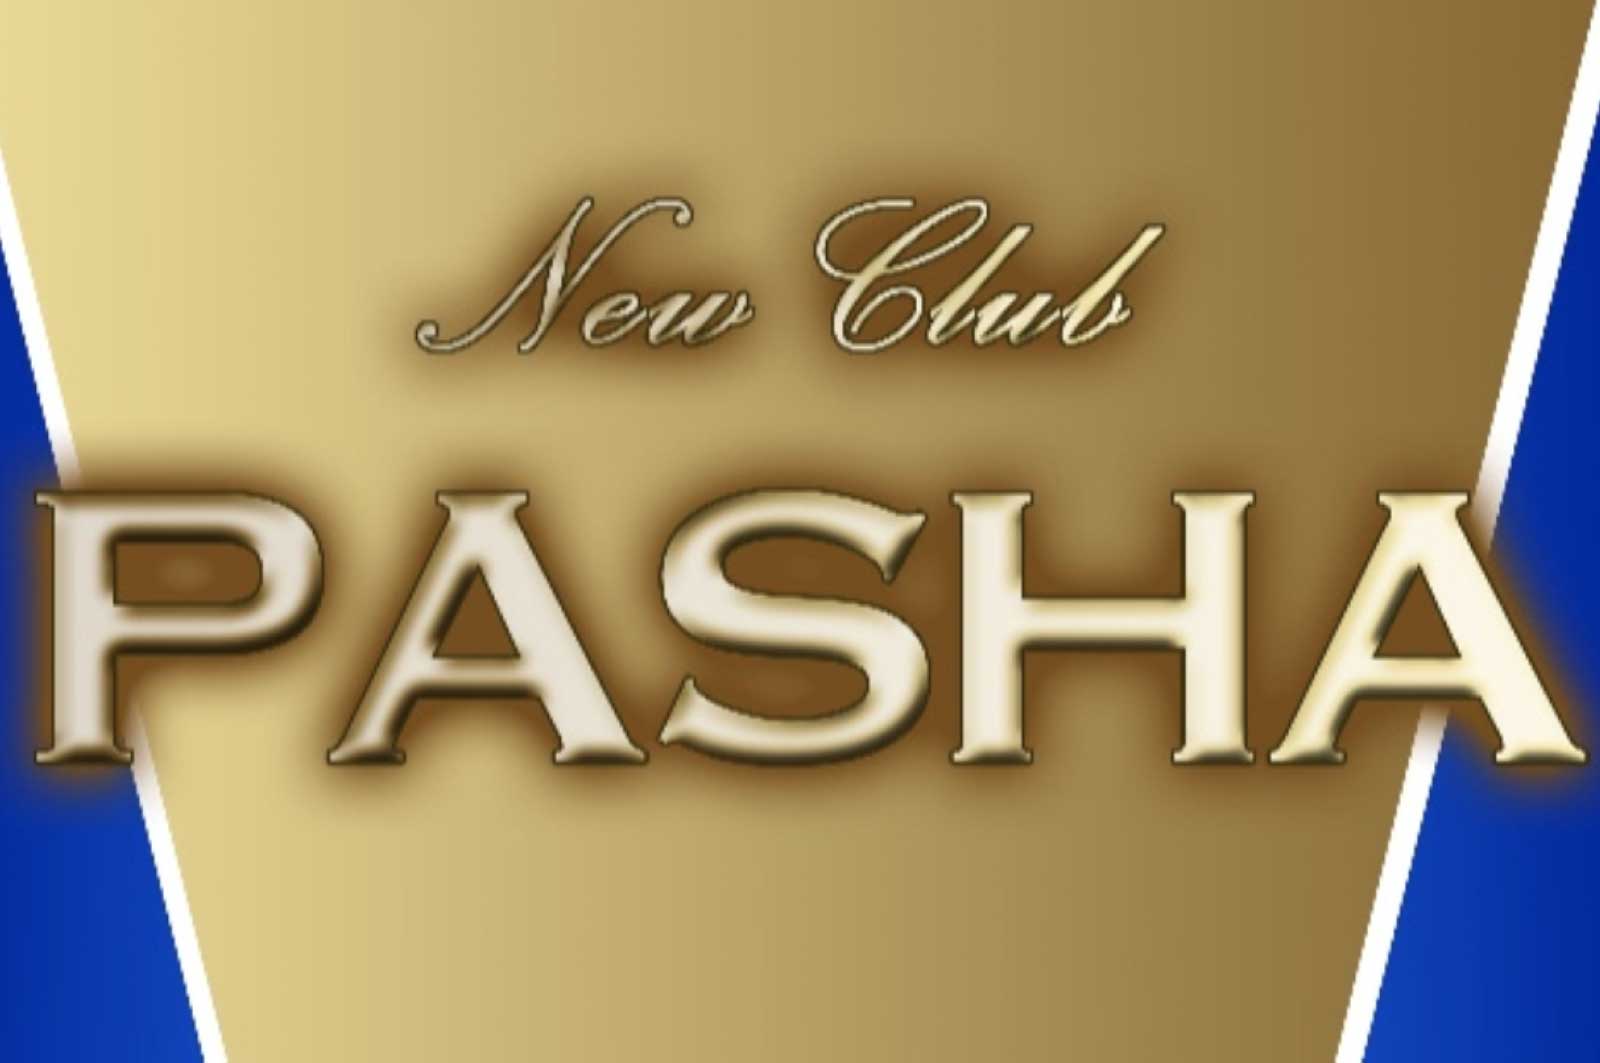 new club PASHA